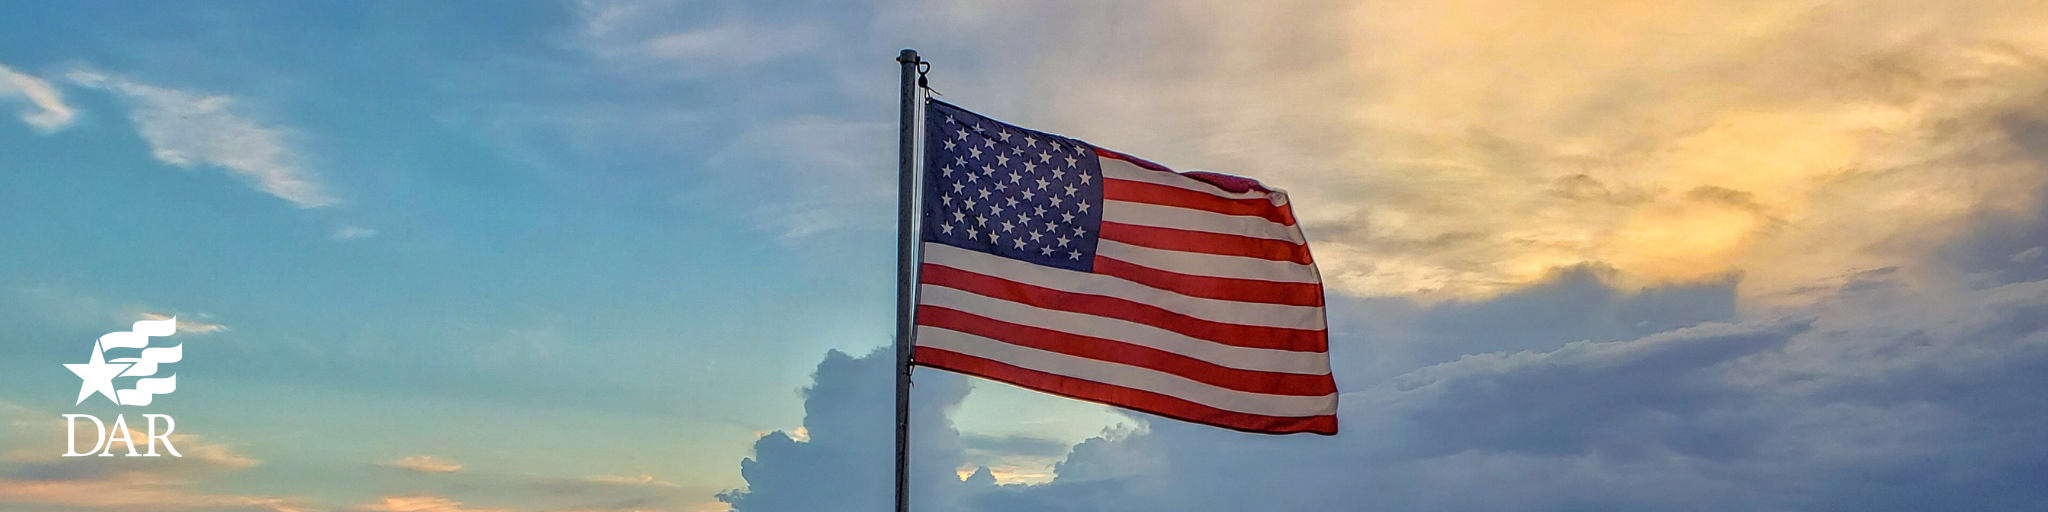 Flag of the United States. Image courtesy of Canva for Non-profits.